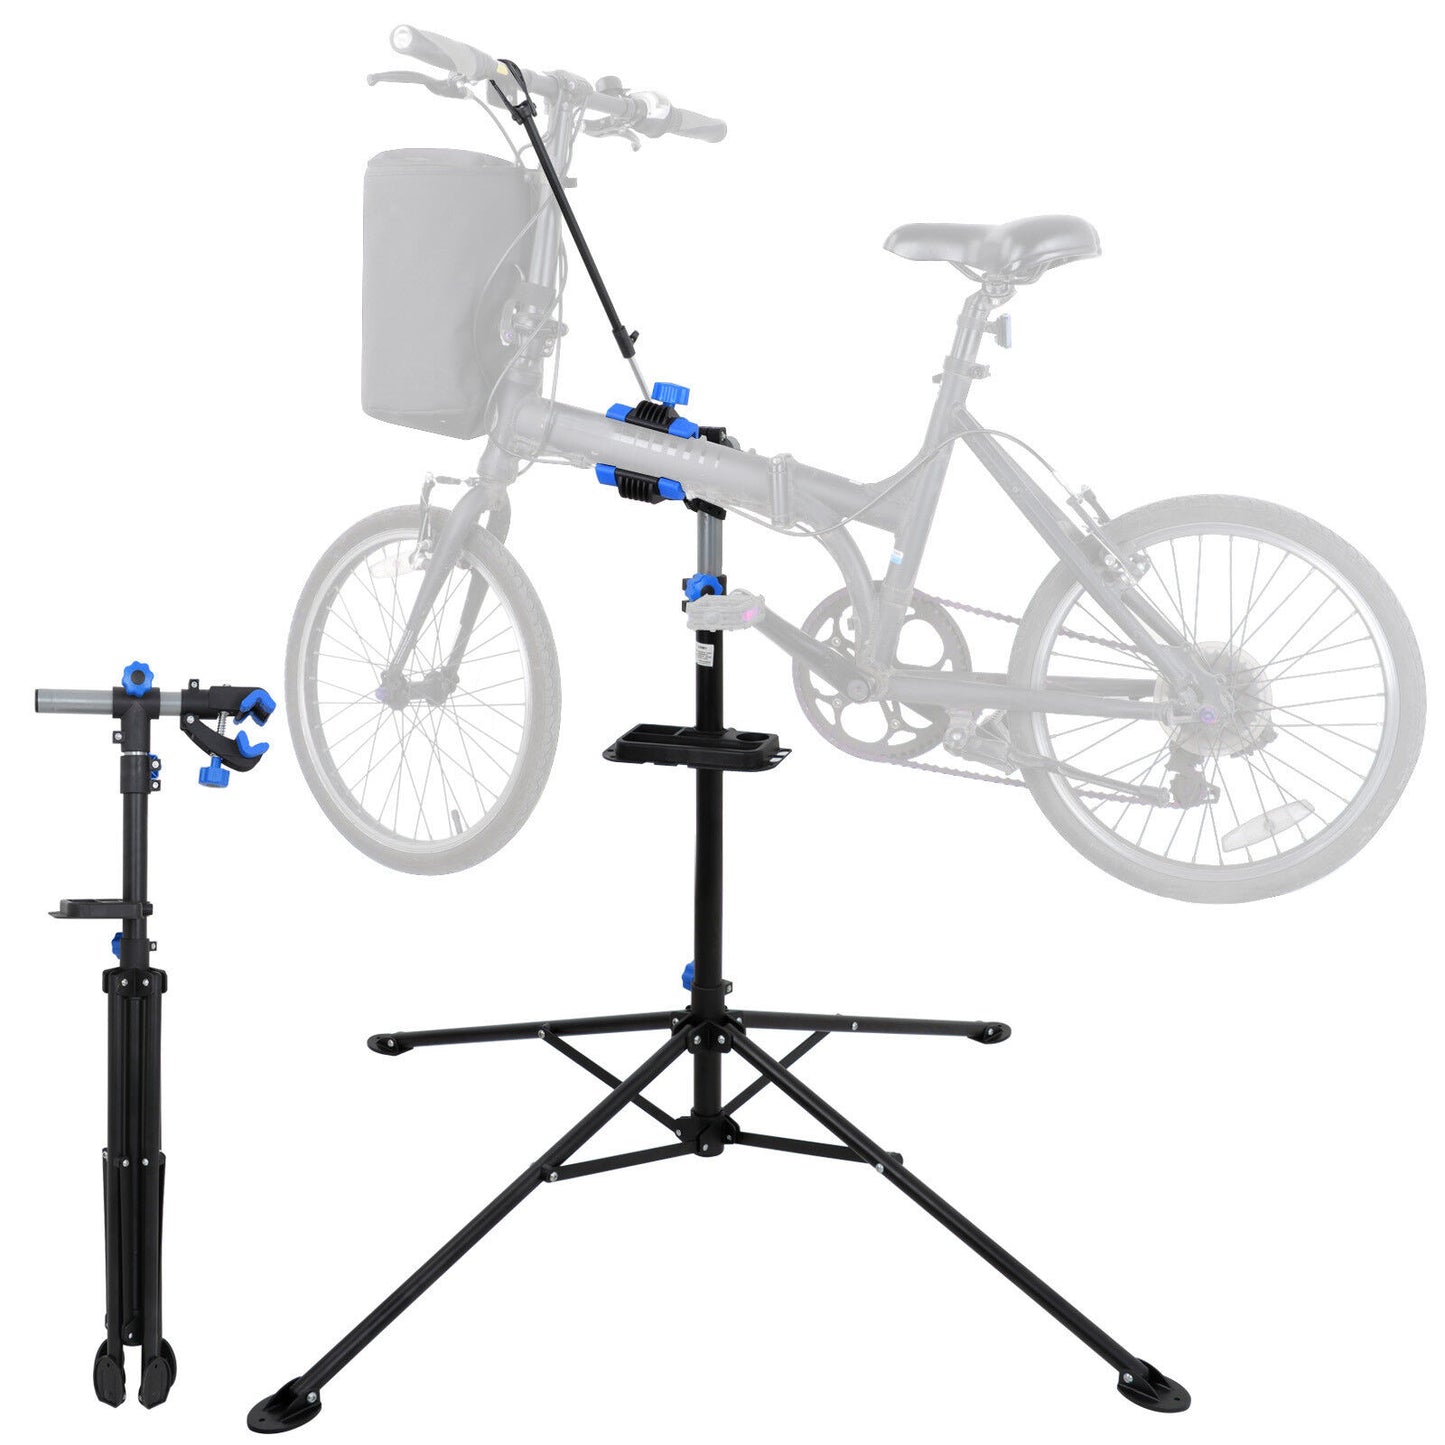 Metal Portable Home Heavy Duty Bike Repair Stand Adjustable Height Rack Tool